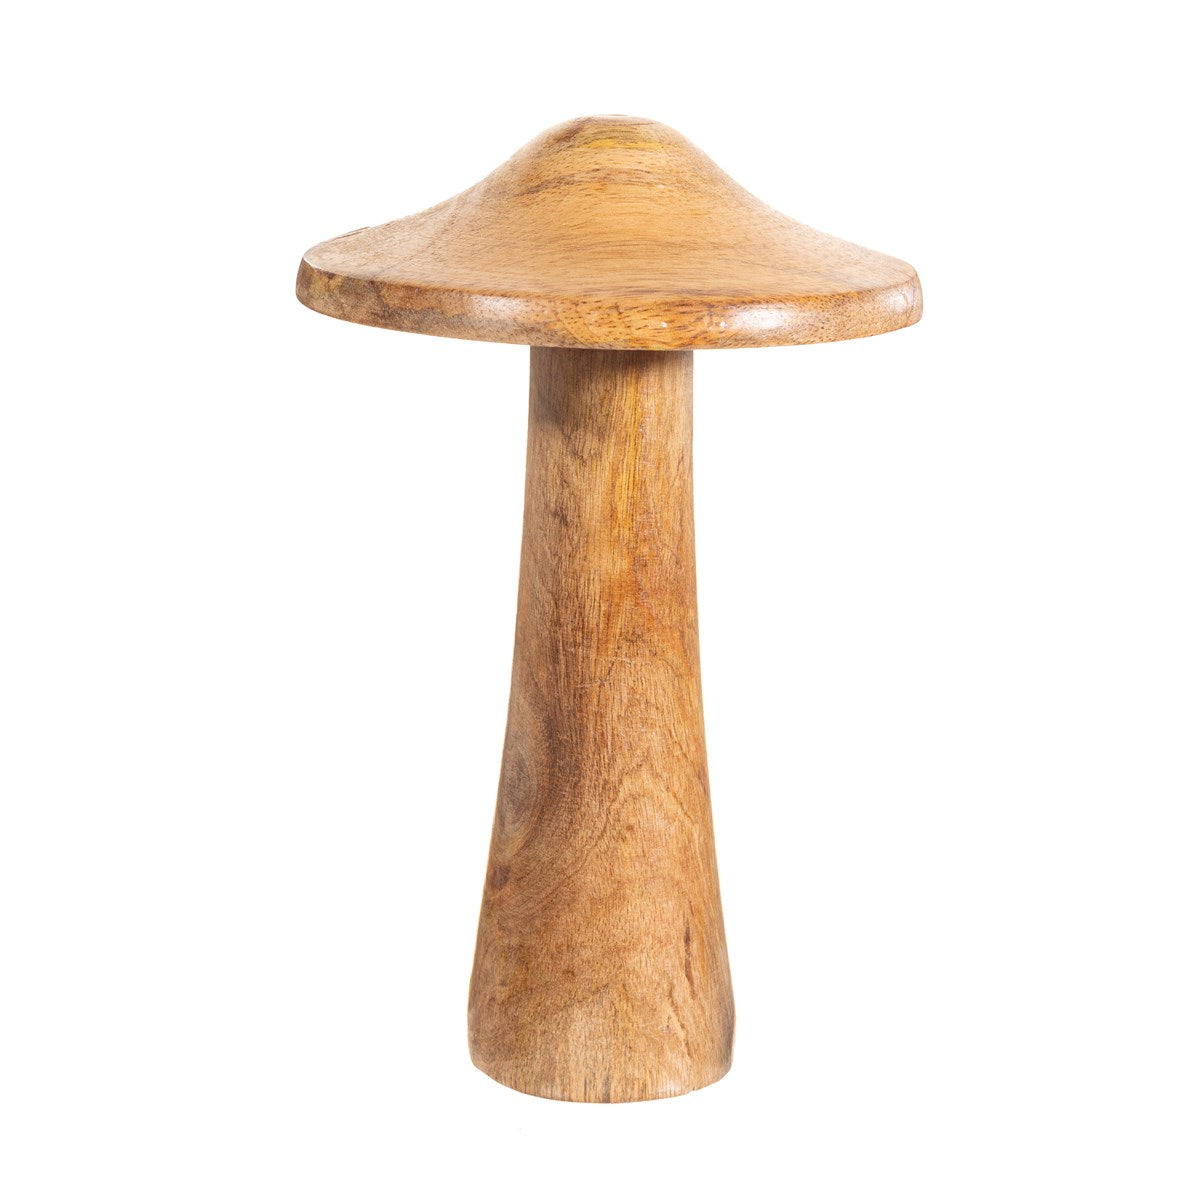 Sass & Belle wooden mushroom decoration